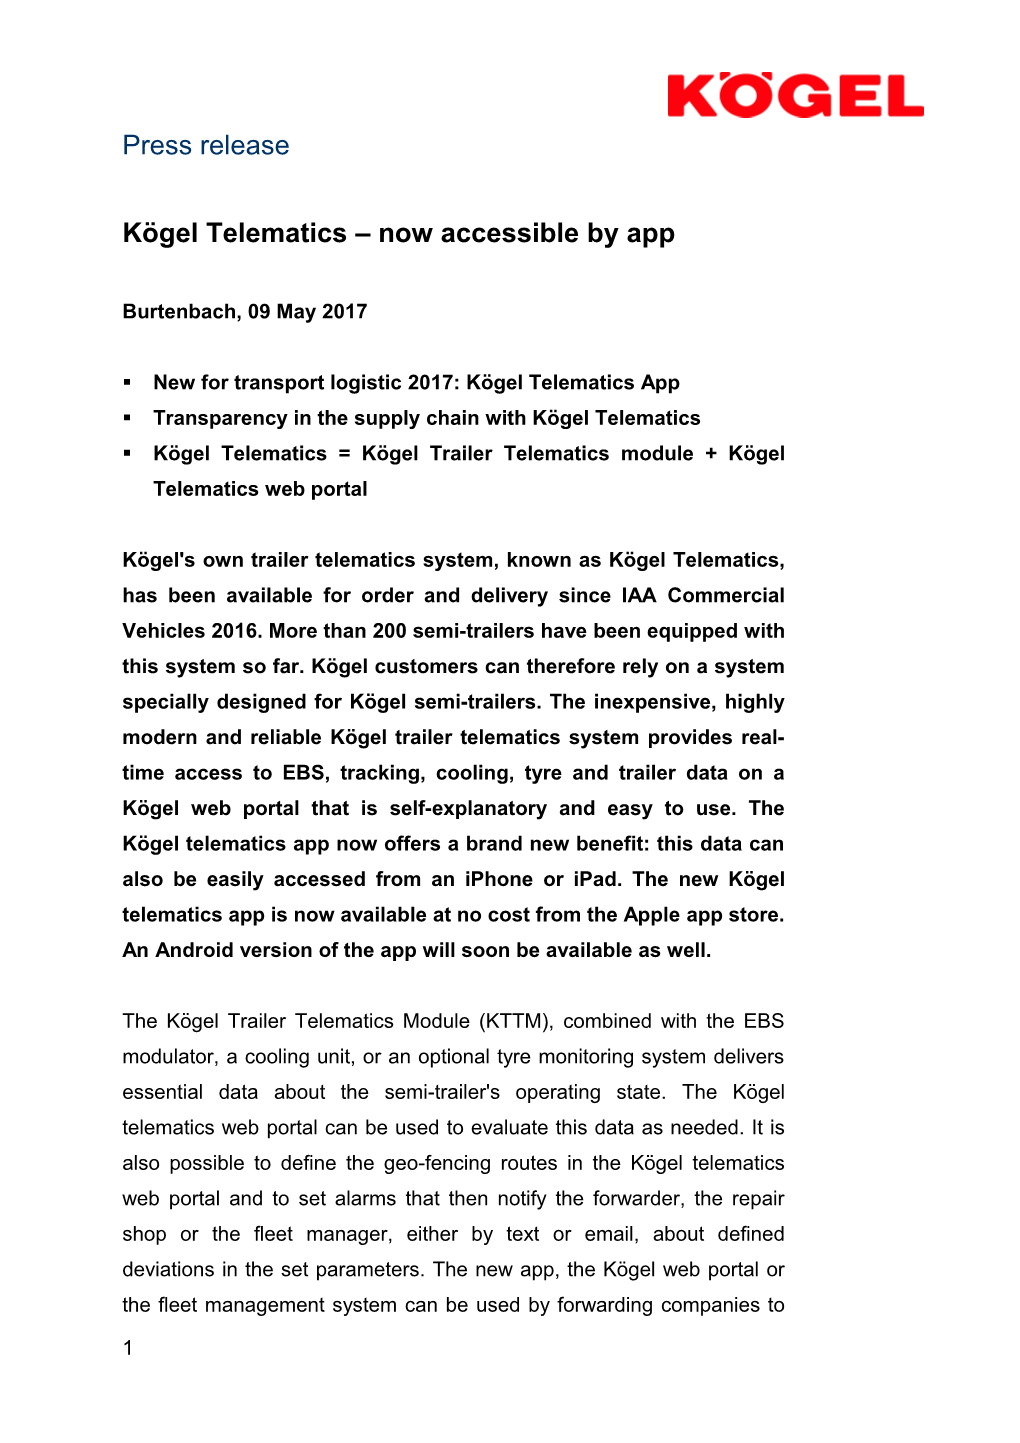 Kögel Telematics Now Accessible by App